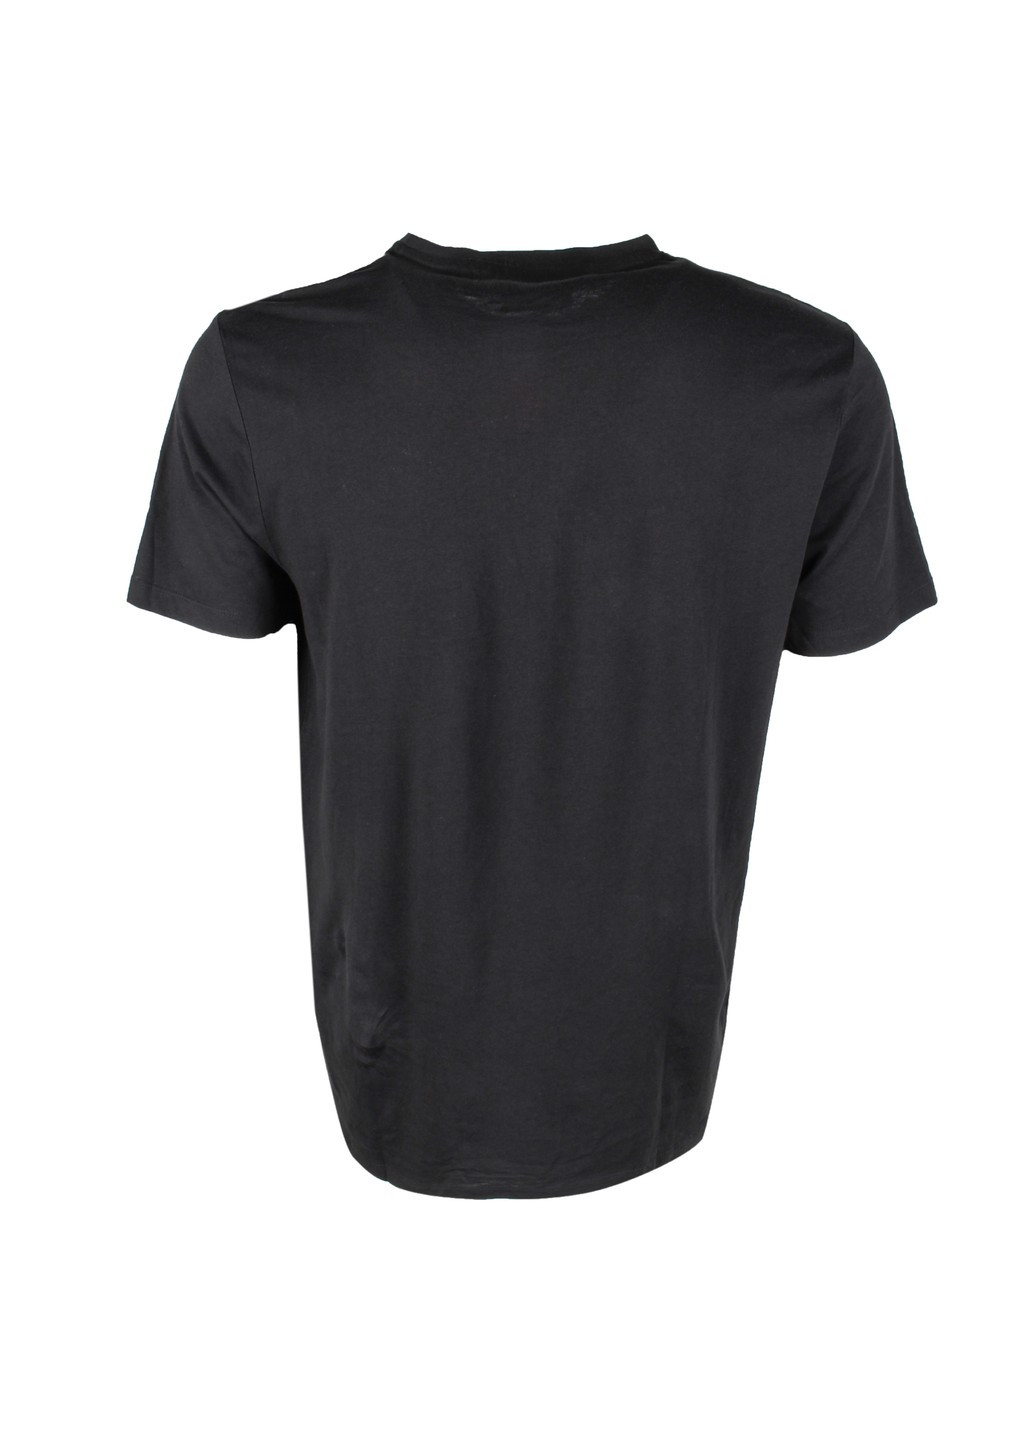 Черная мужская футболка New Look